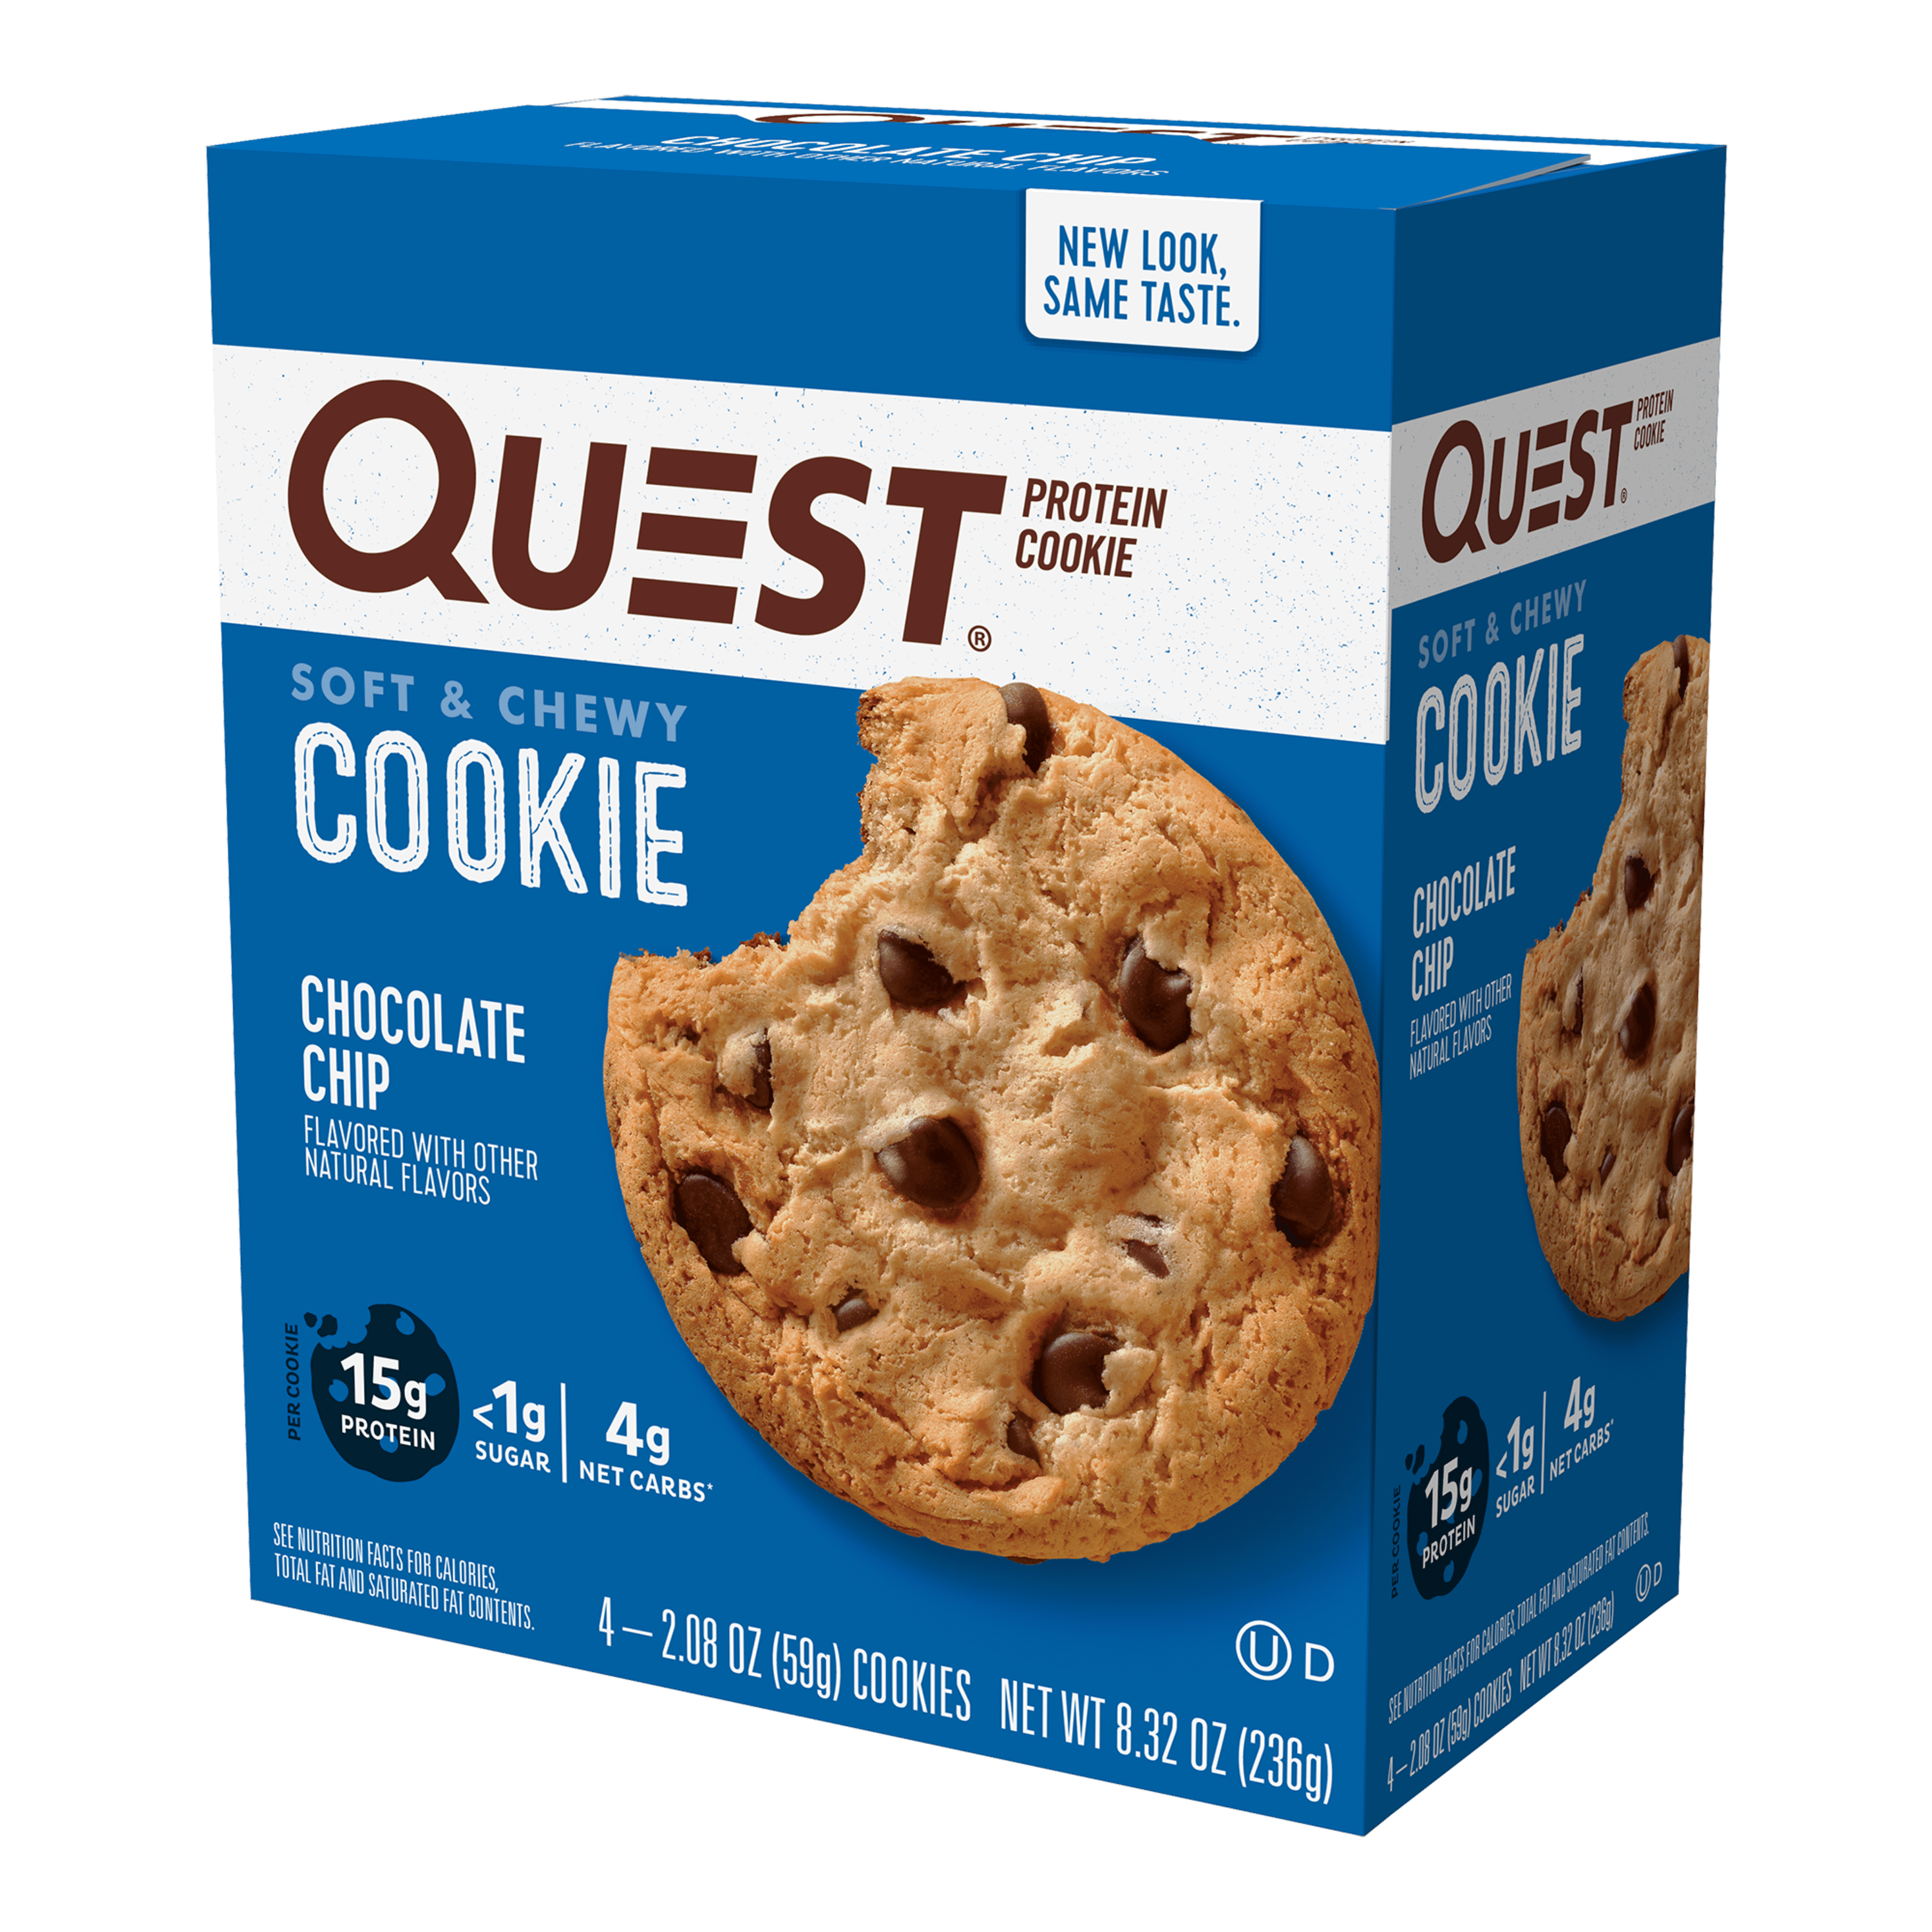 Quest cookie. Fitness cookie печенье. Крафт печеньки. Mone печенье. Quest Nutrition печенье Protein cookie.